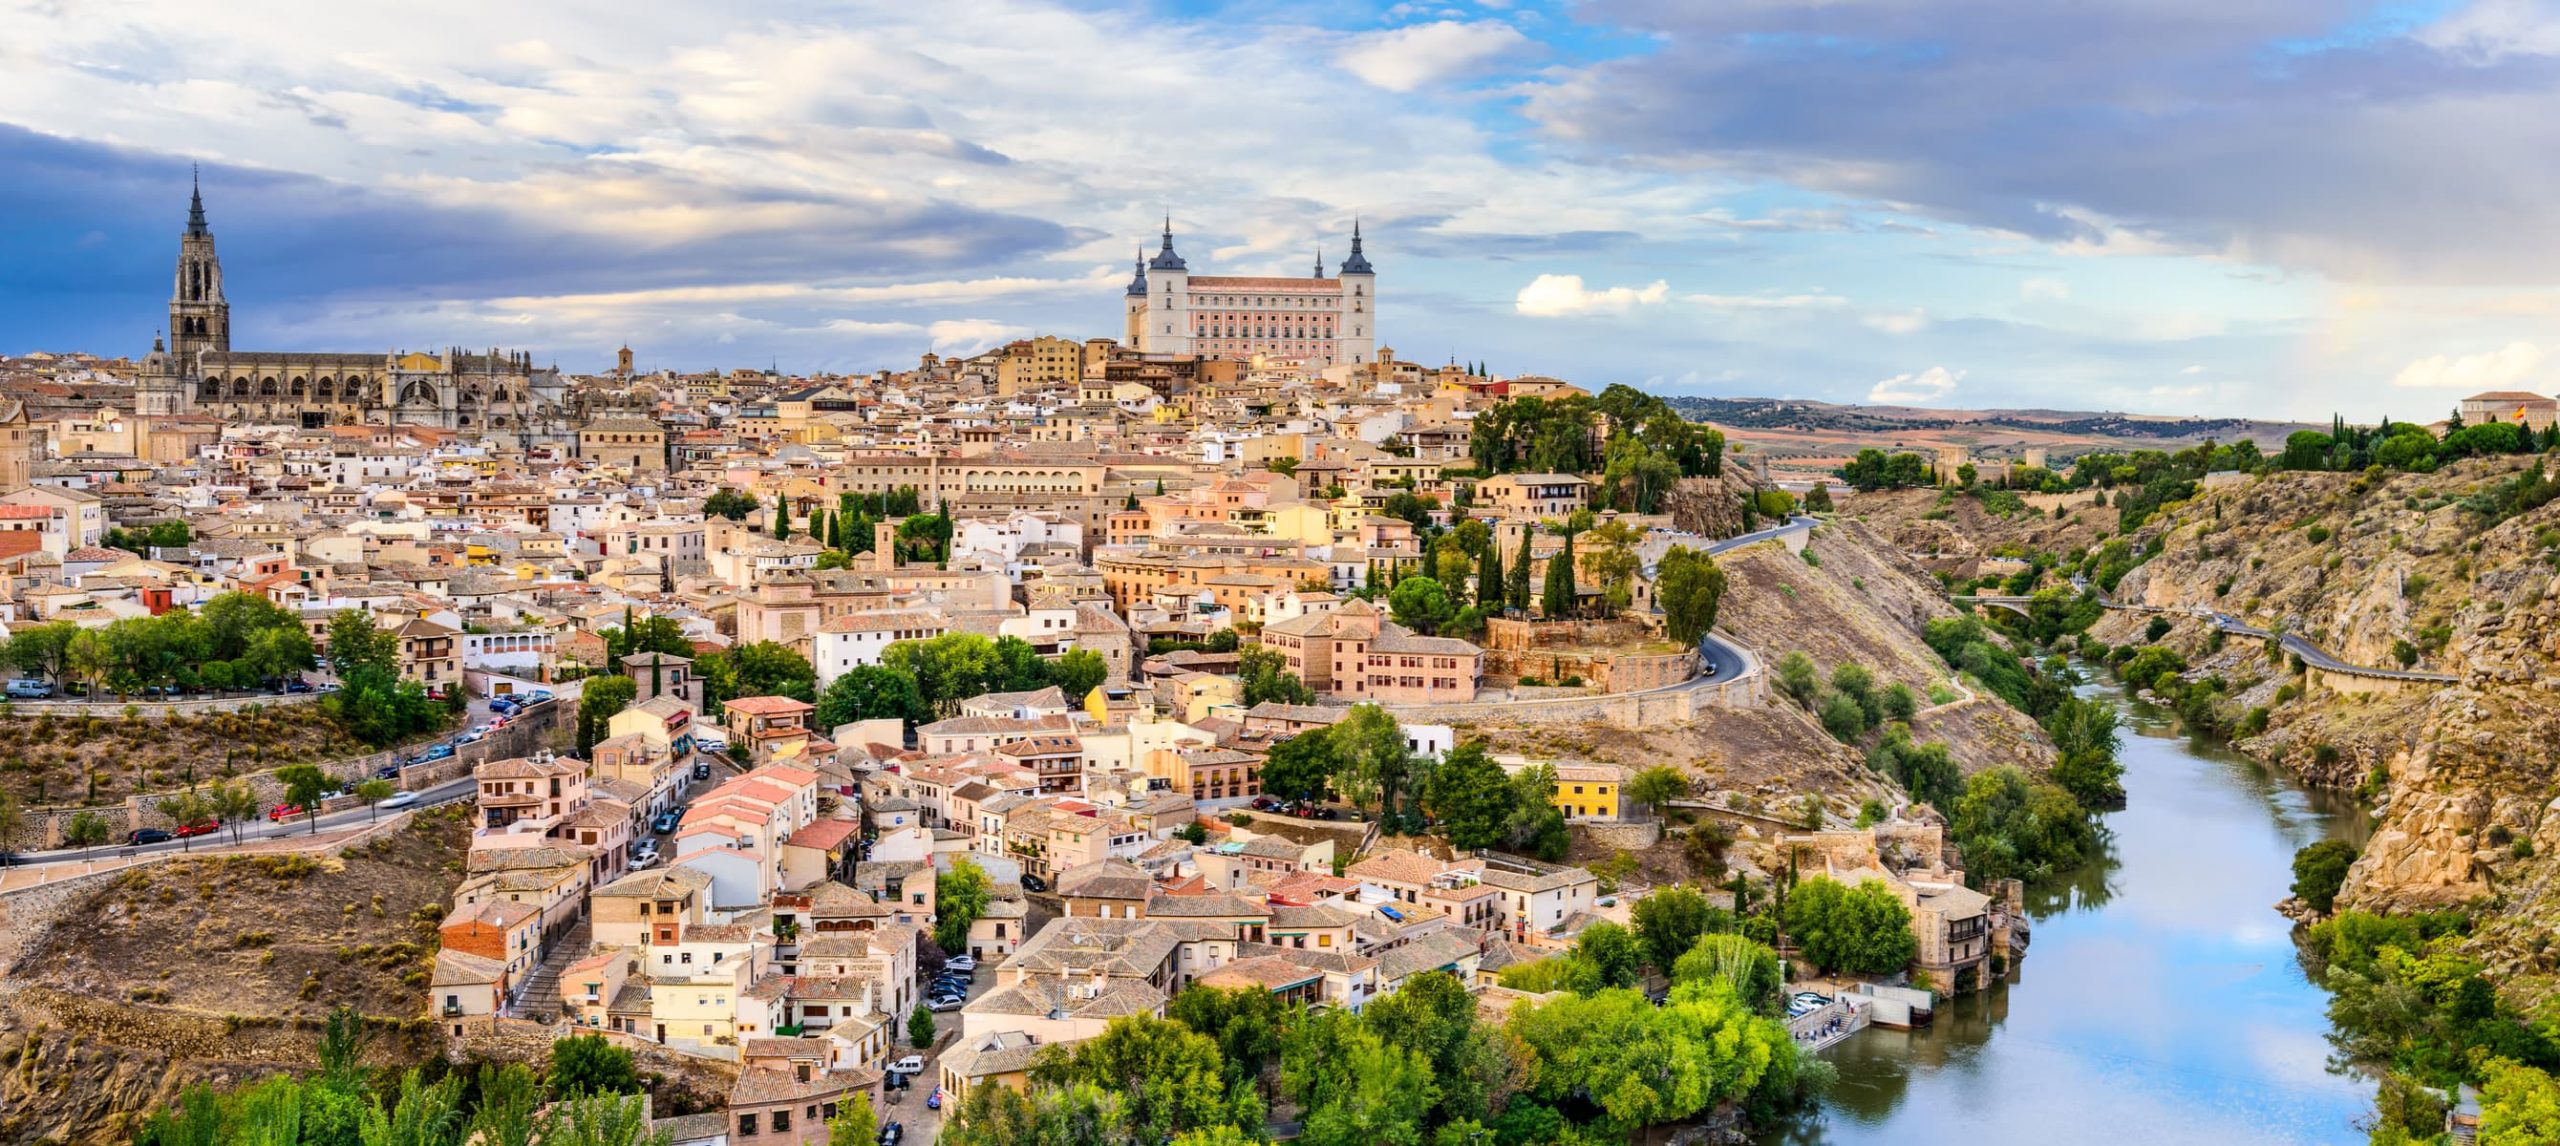 The city of Toledo, in Spain.